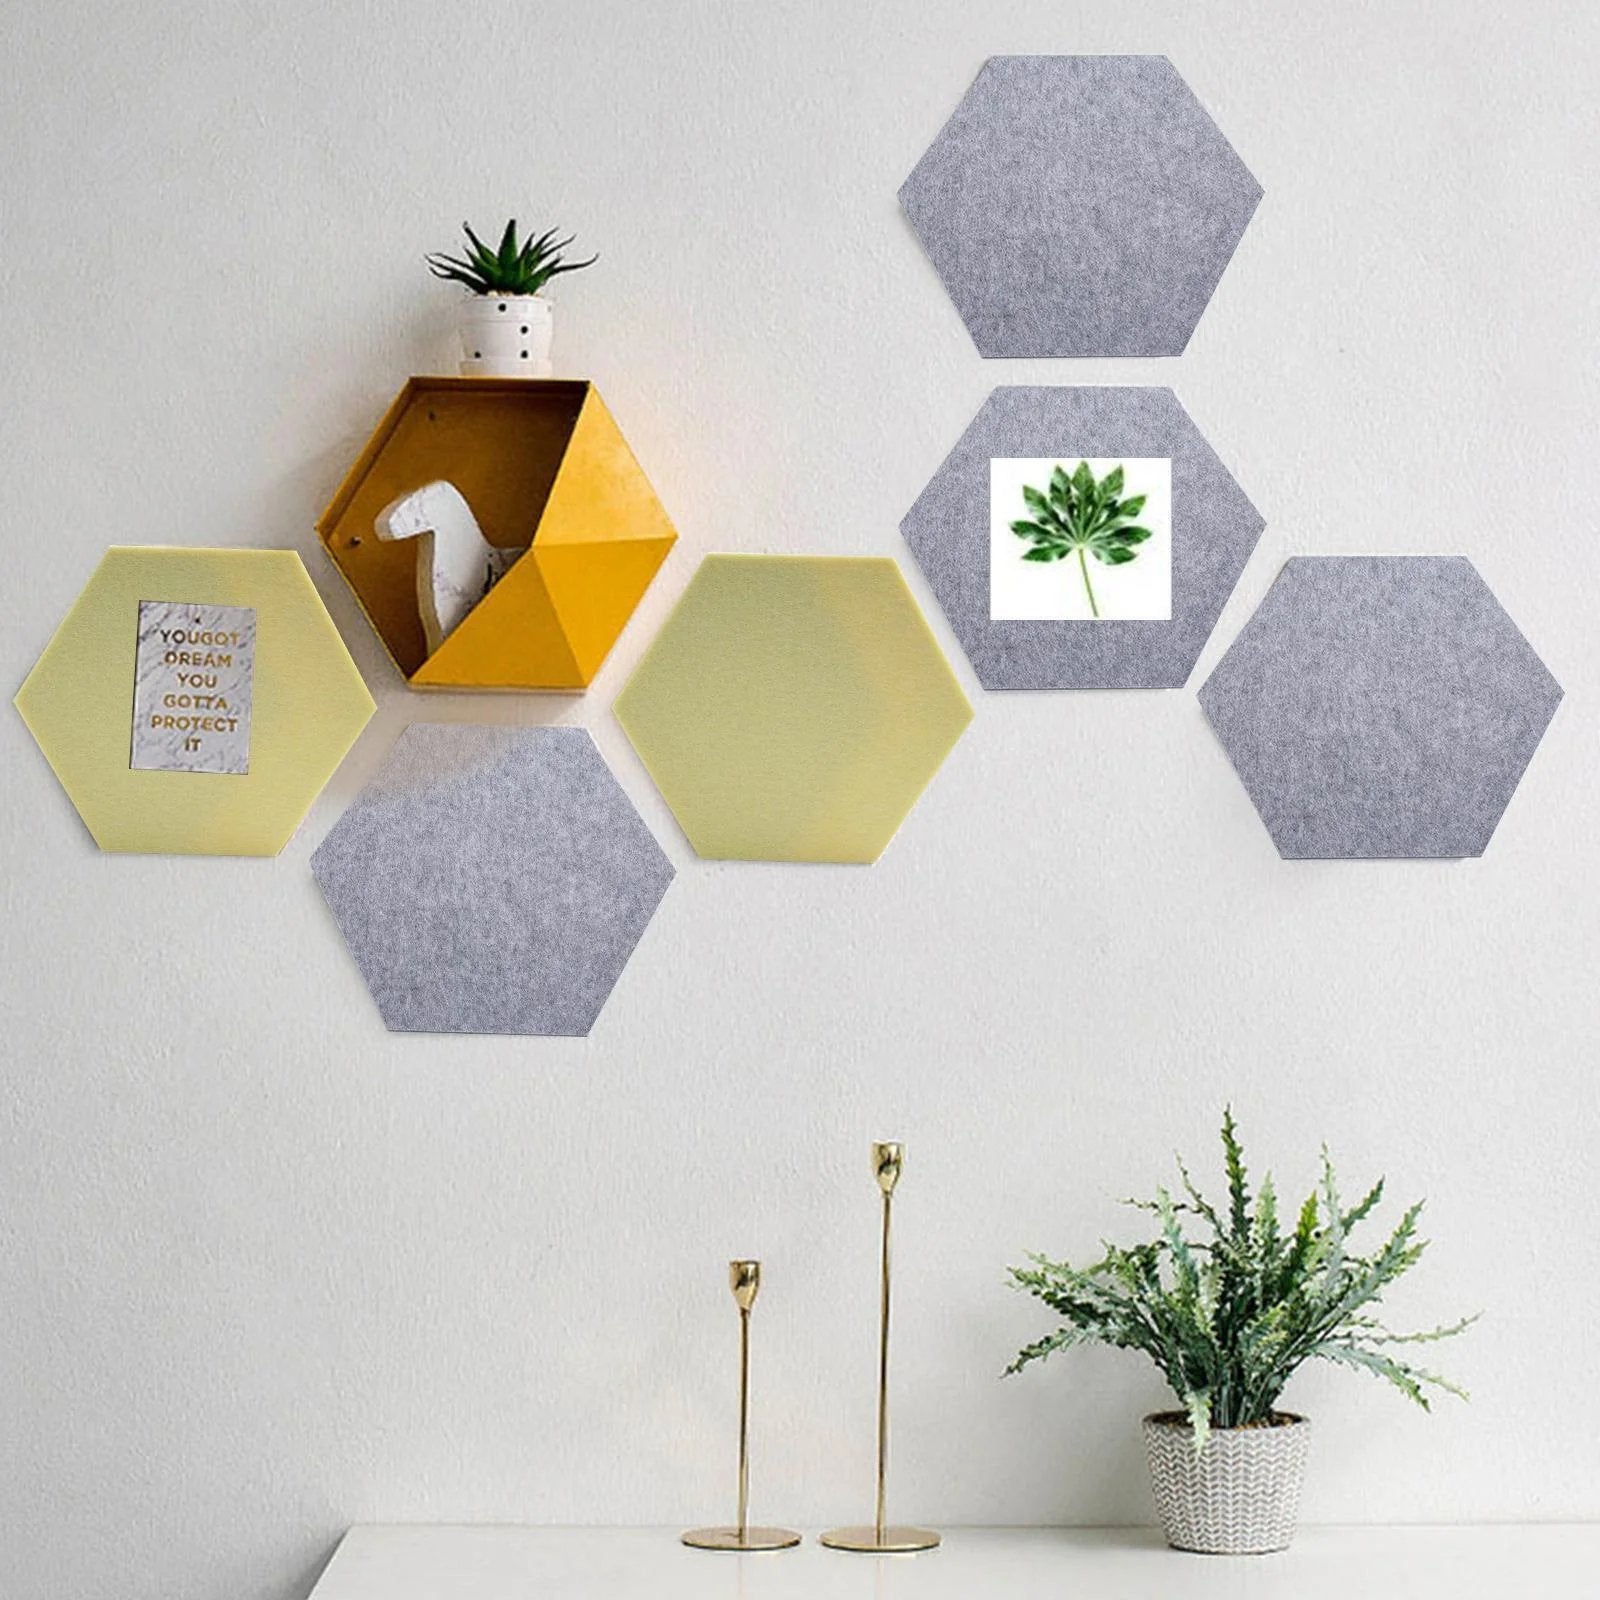 24PCS Hexagon Acoustic Foam Panels Sound Absorbing Wall Proof Noises Tiles I2M9 - Office Catch